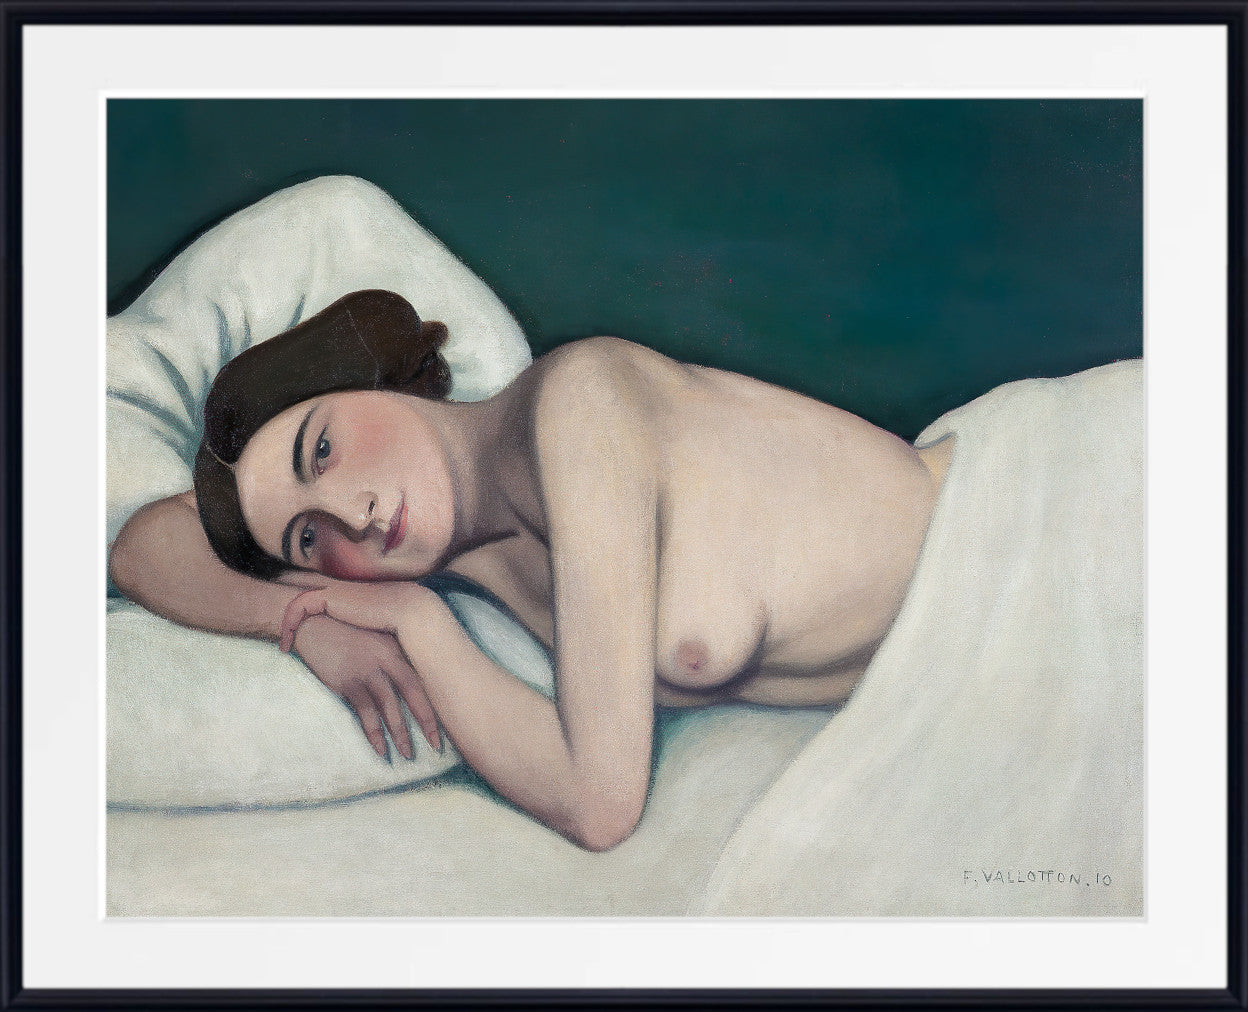 Nude in Bed, Félix Vallotton